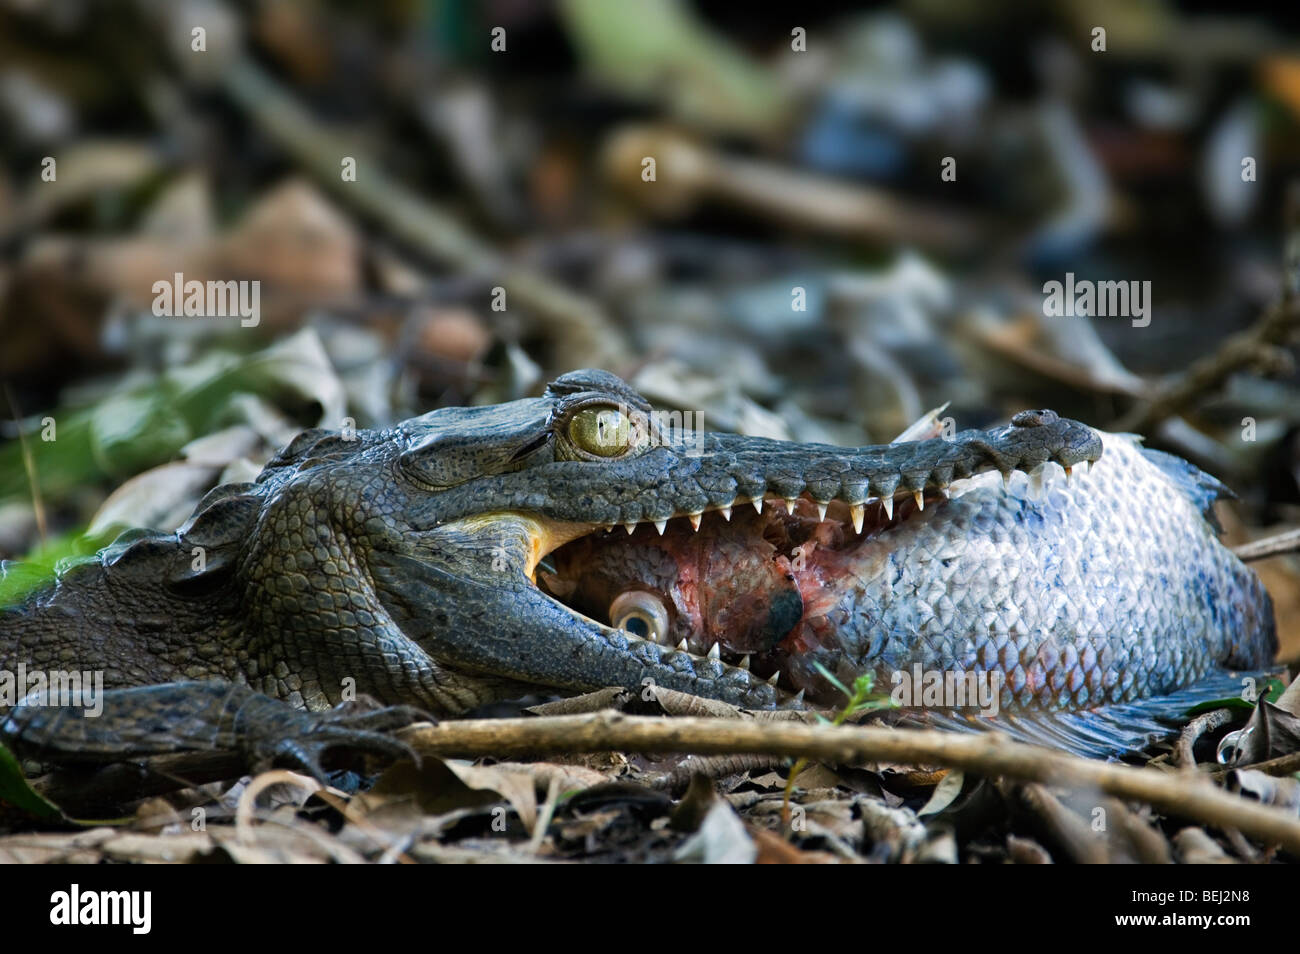 Young Spectacled caiman (Caiman crocodilus) swallowing fish, Carara National Park, Costa Rica Stock Photo